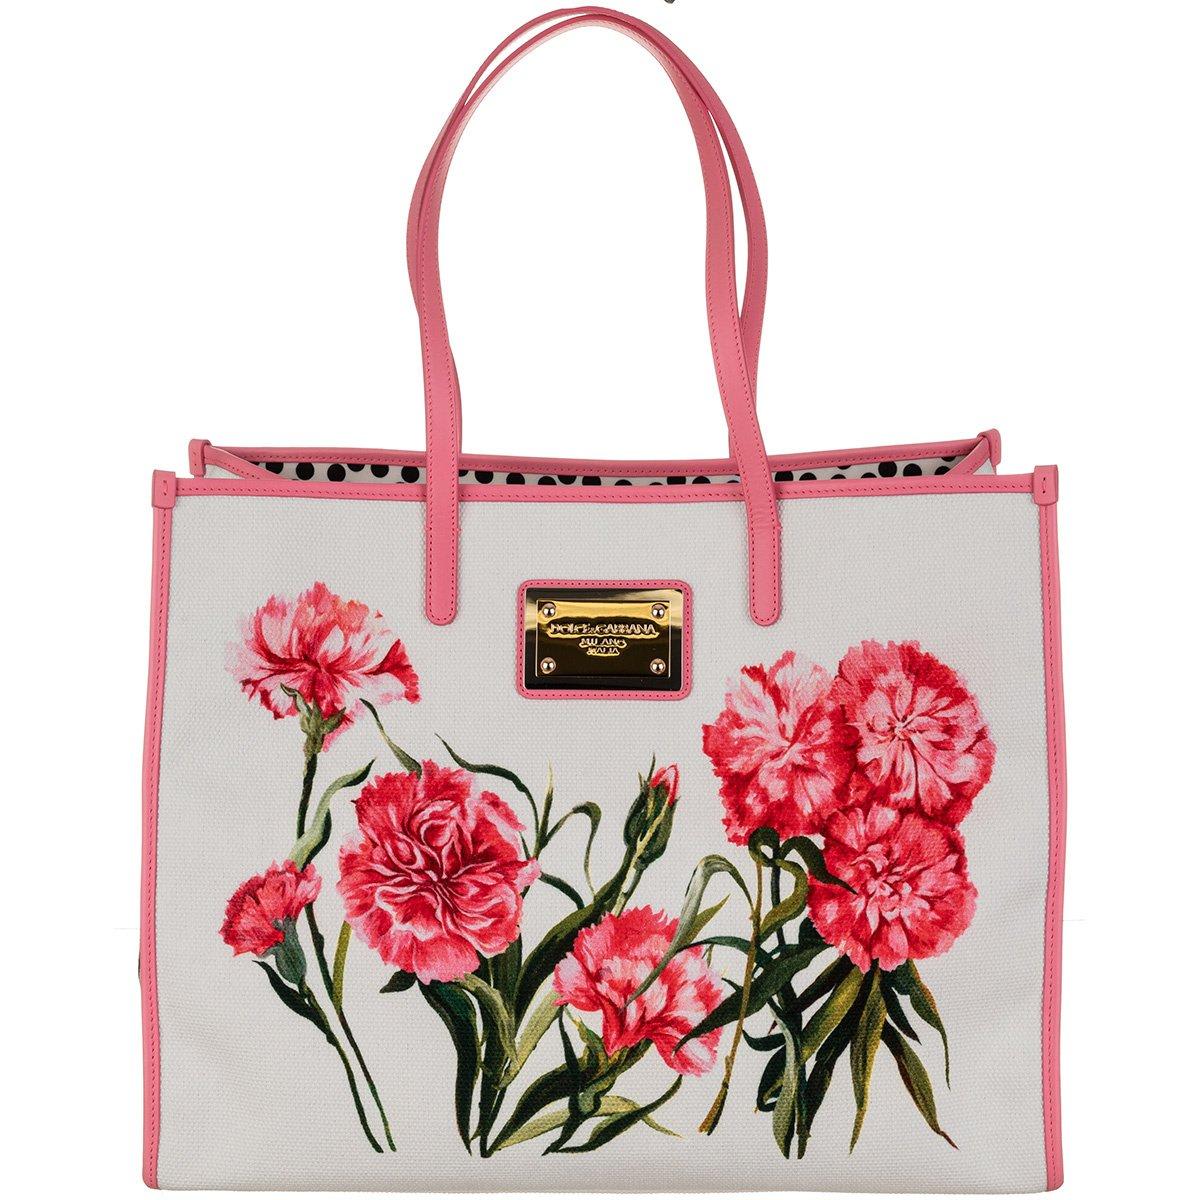 Dolce & Gabbana Floral Printed Top Handle Bag